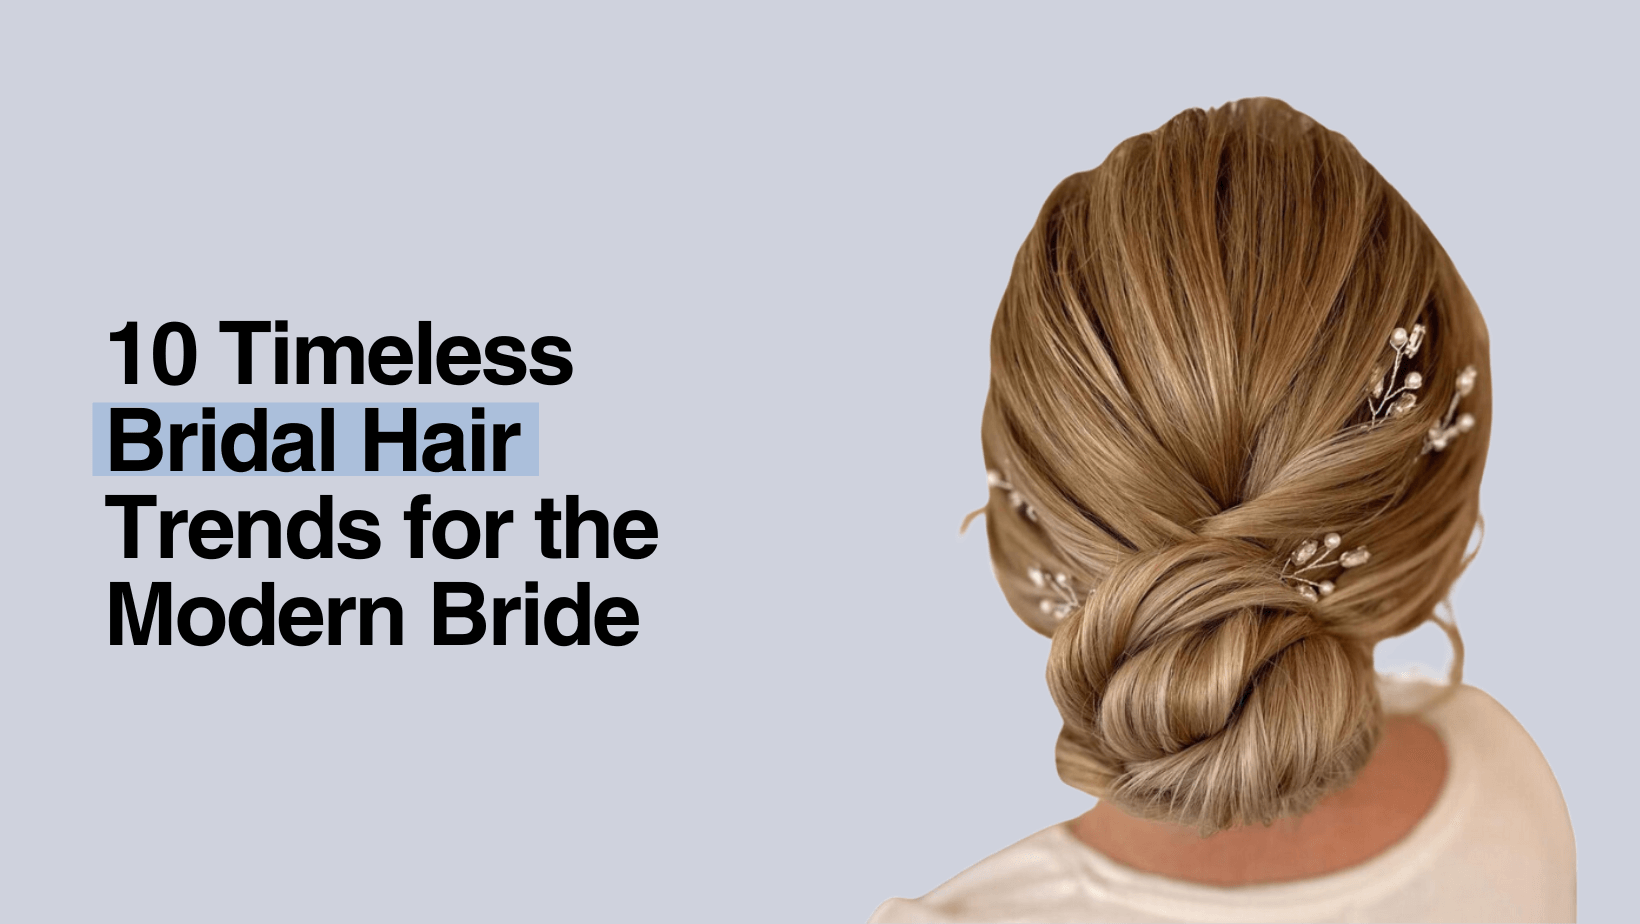 10 Timeless Bridal Hair Trends for the Modern Bride